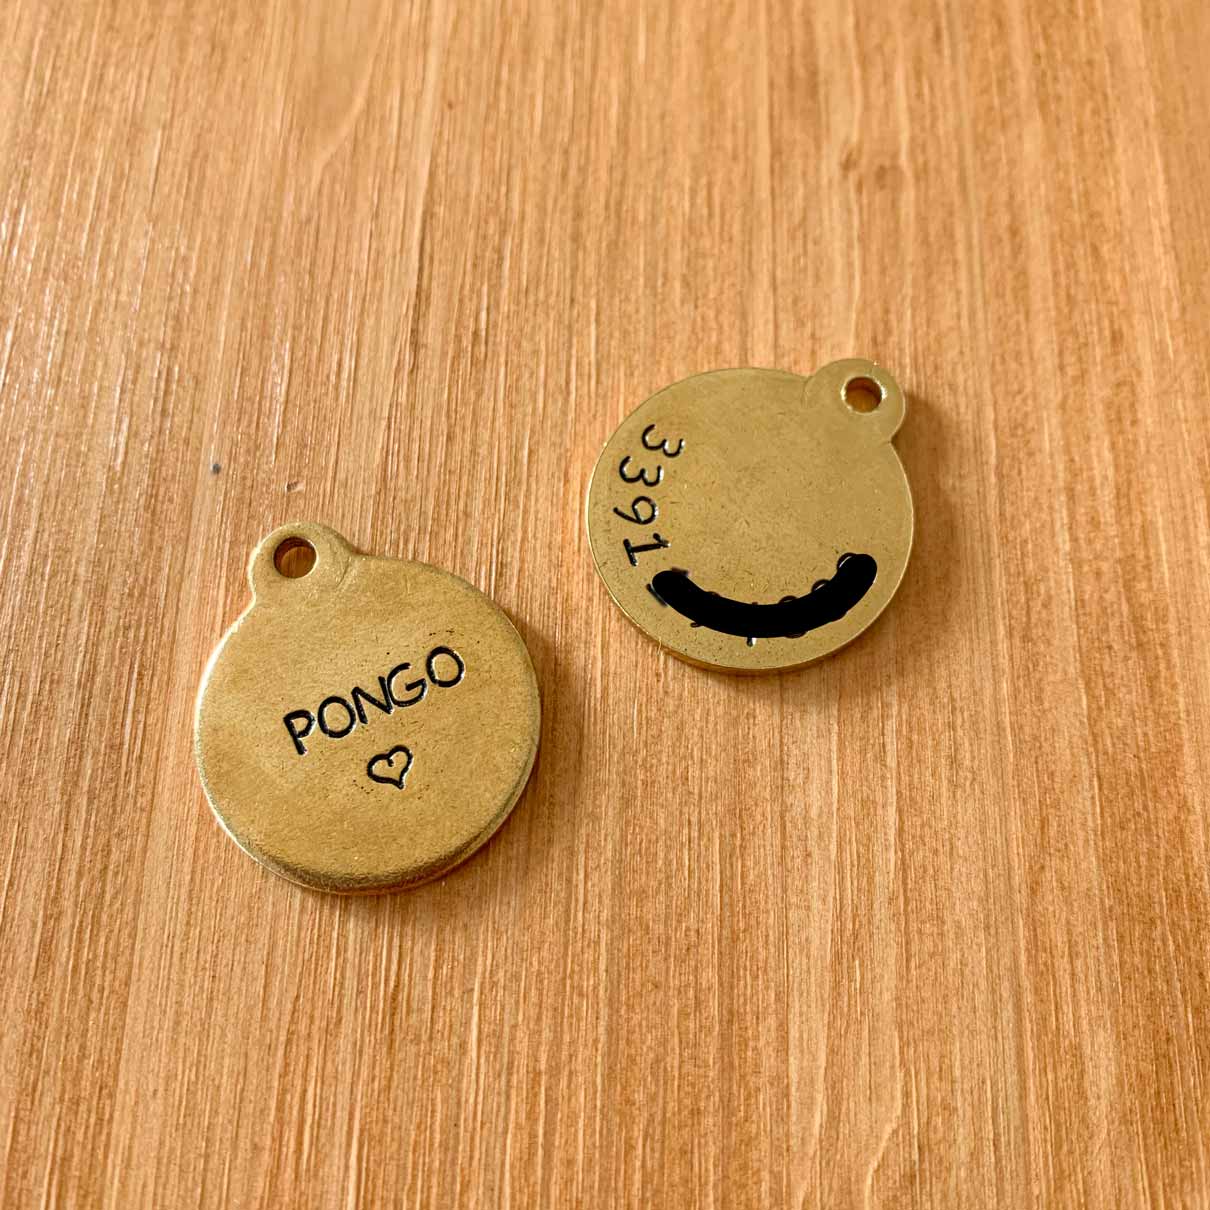 Personalized brass dog tag